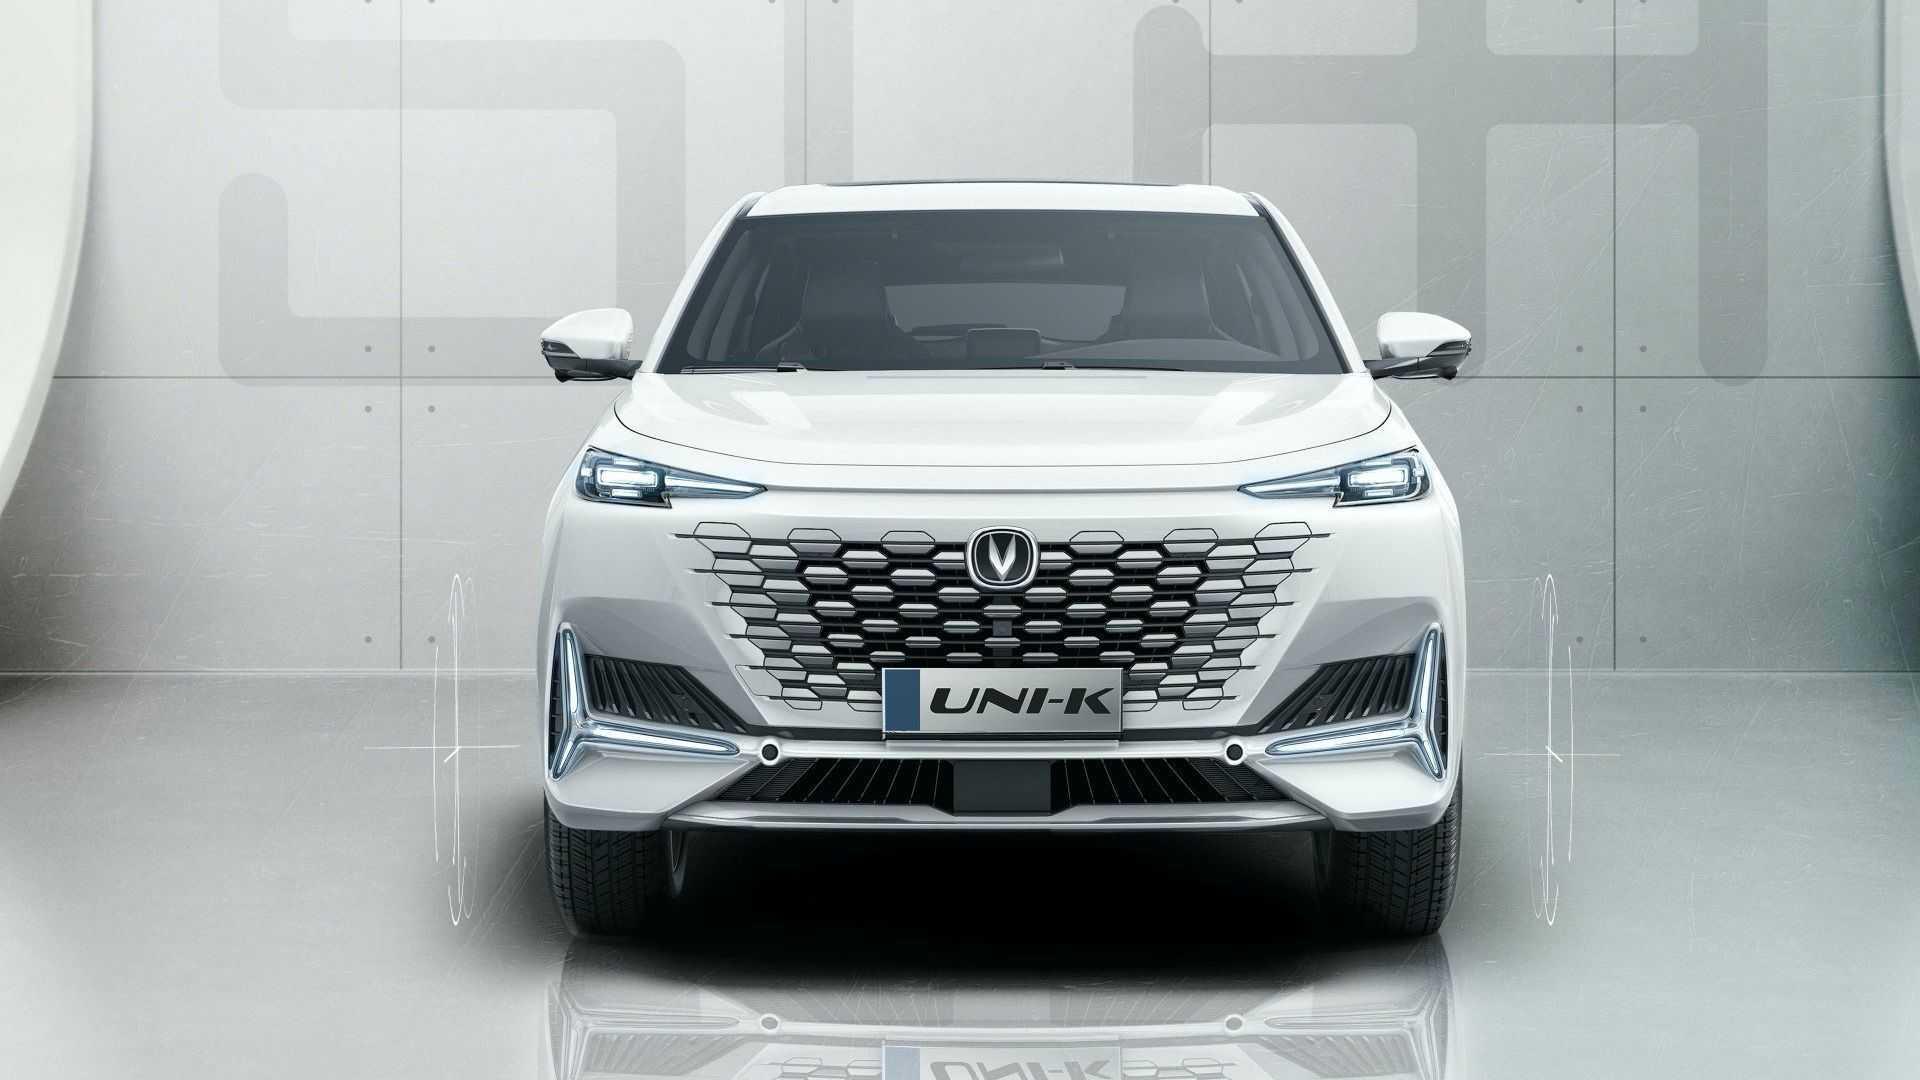 2021 Changan Uni-K SUV